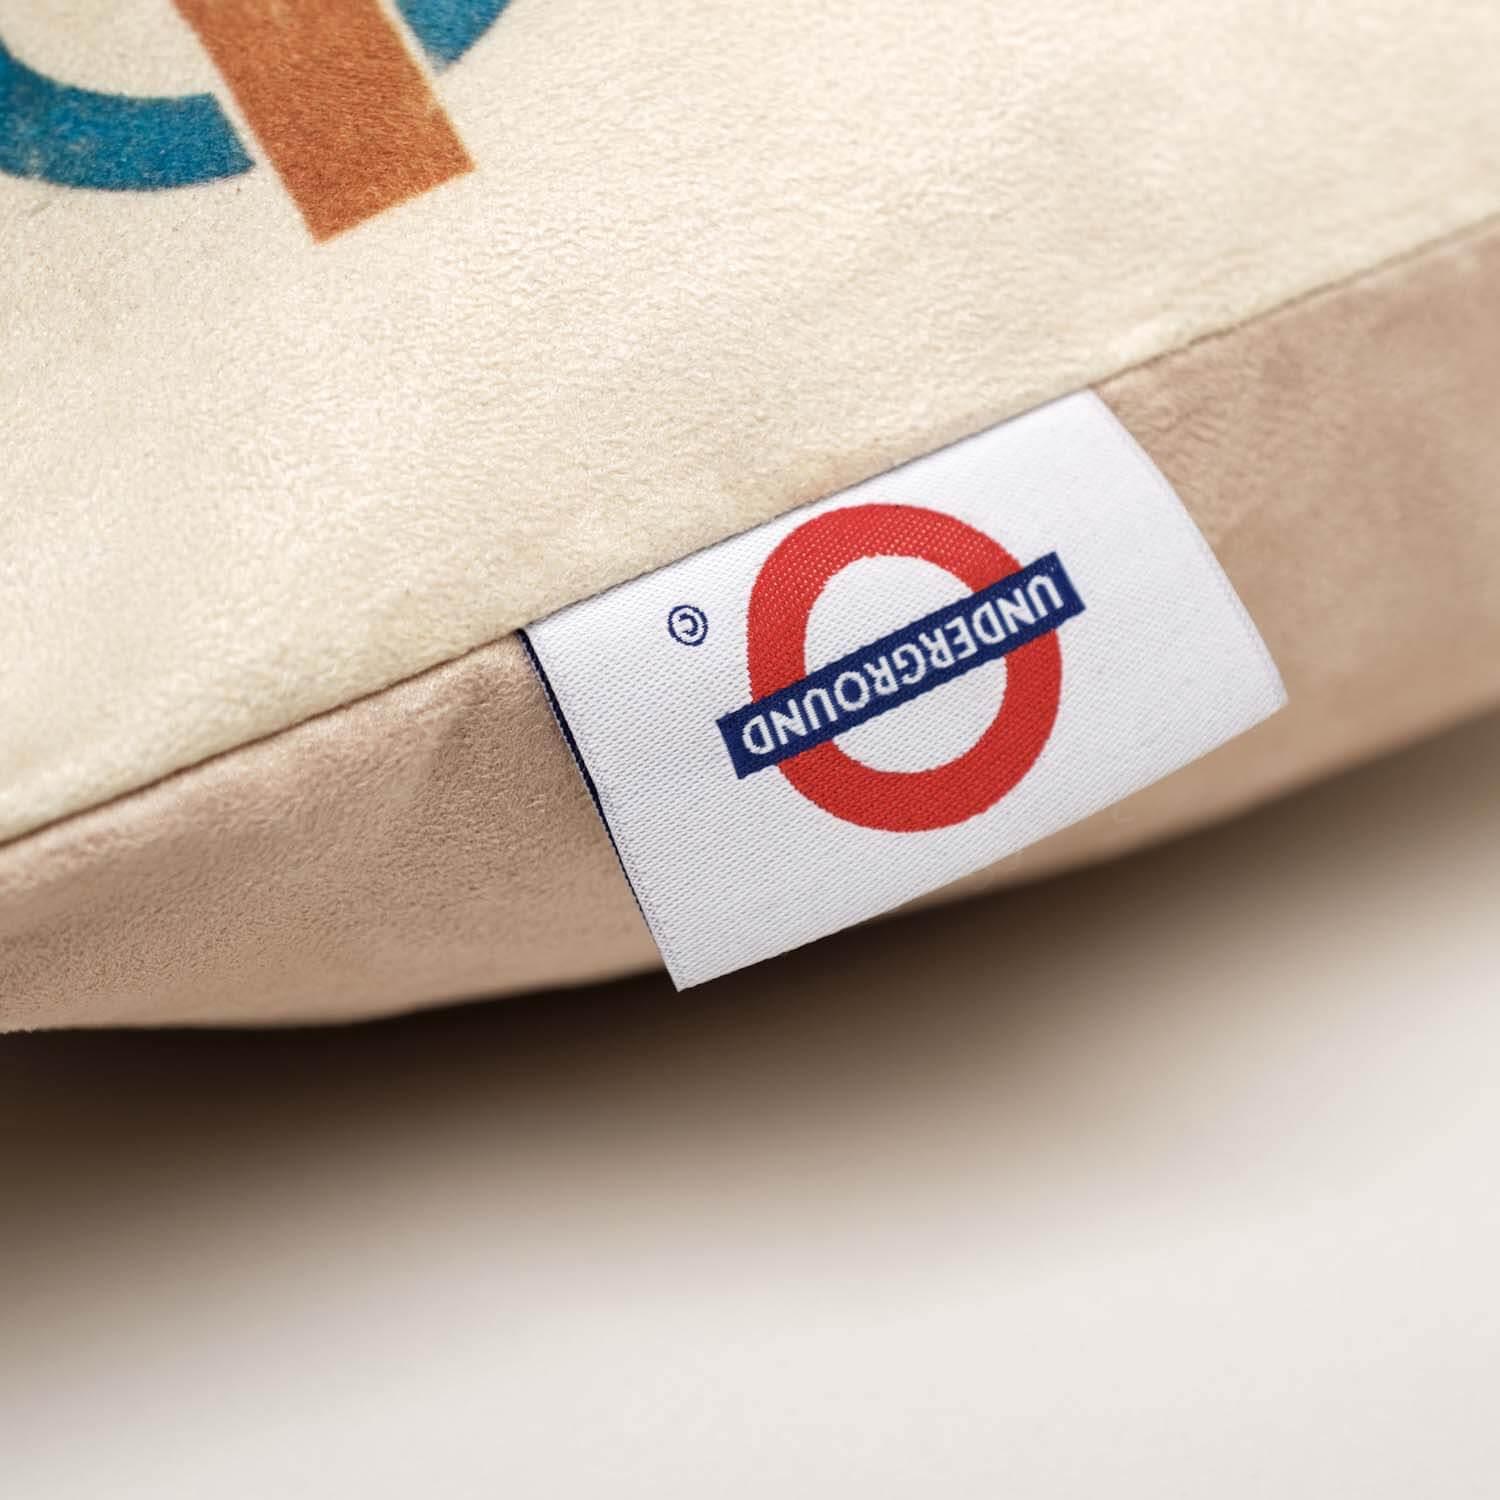 Giant Panda - London Transport Cushion - Handmade Cushions UK - WeLoveCushions